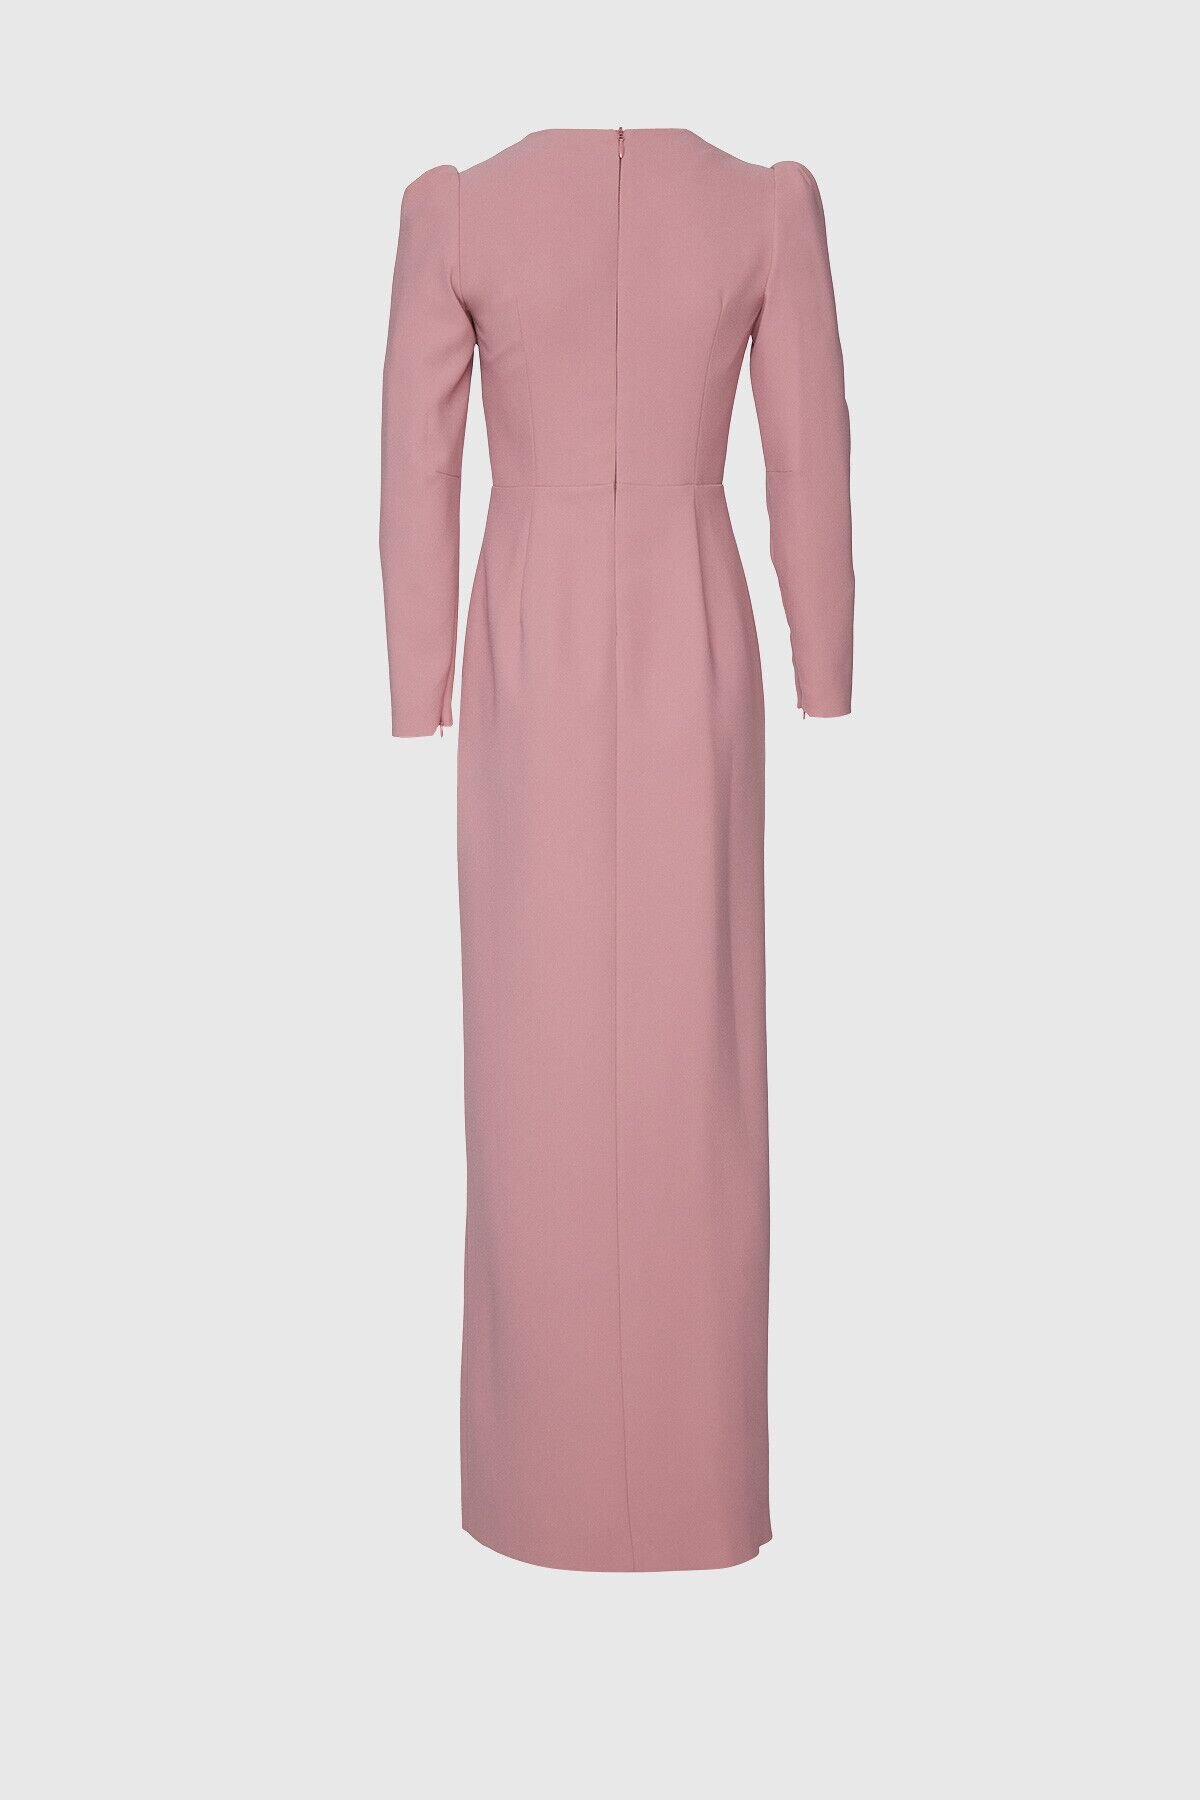 Stone Detailed Long Pink Dress